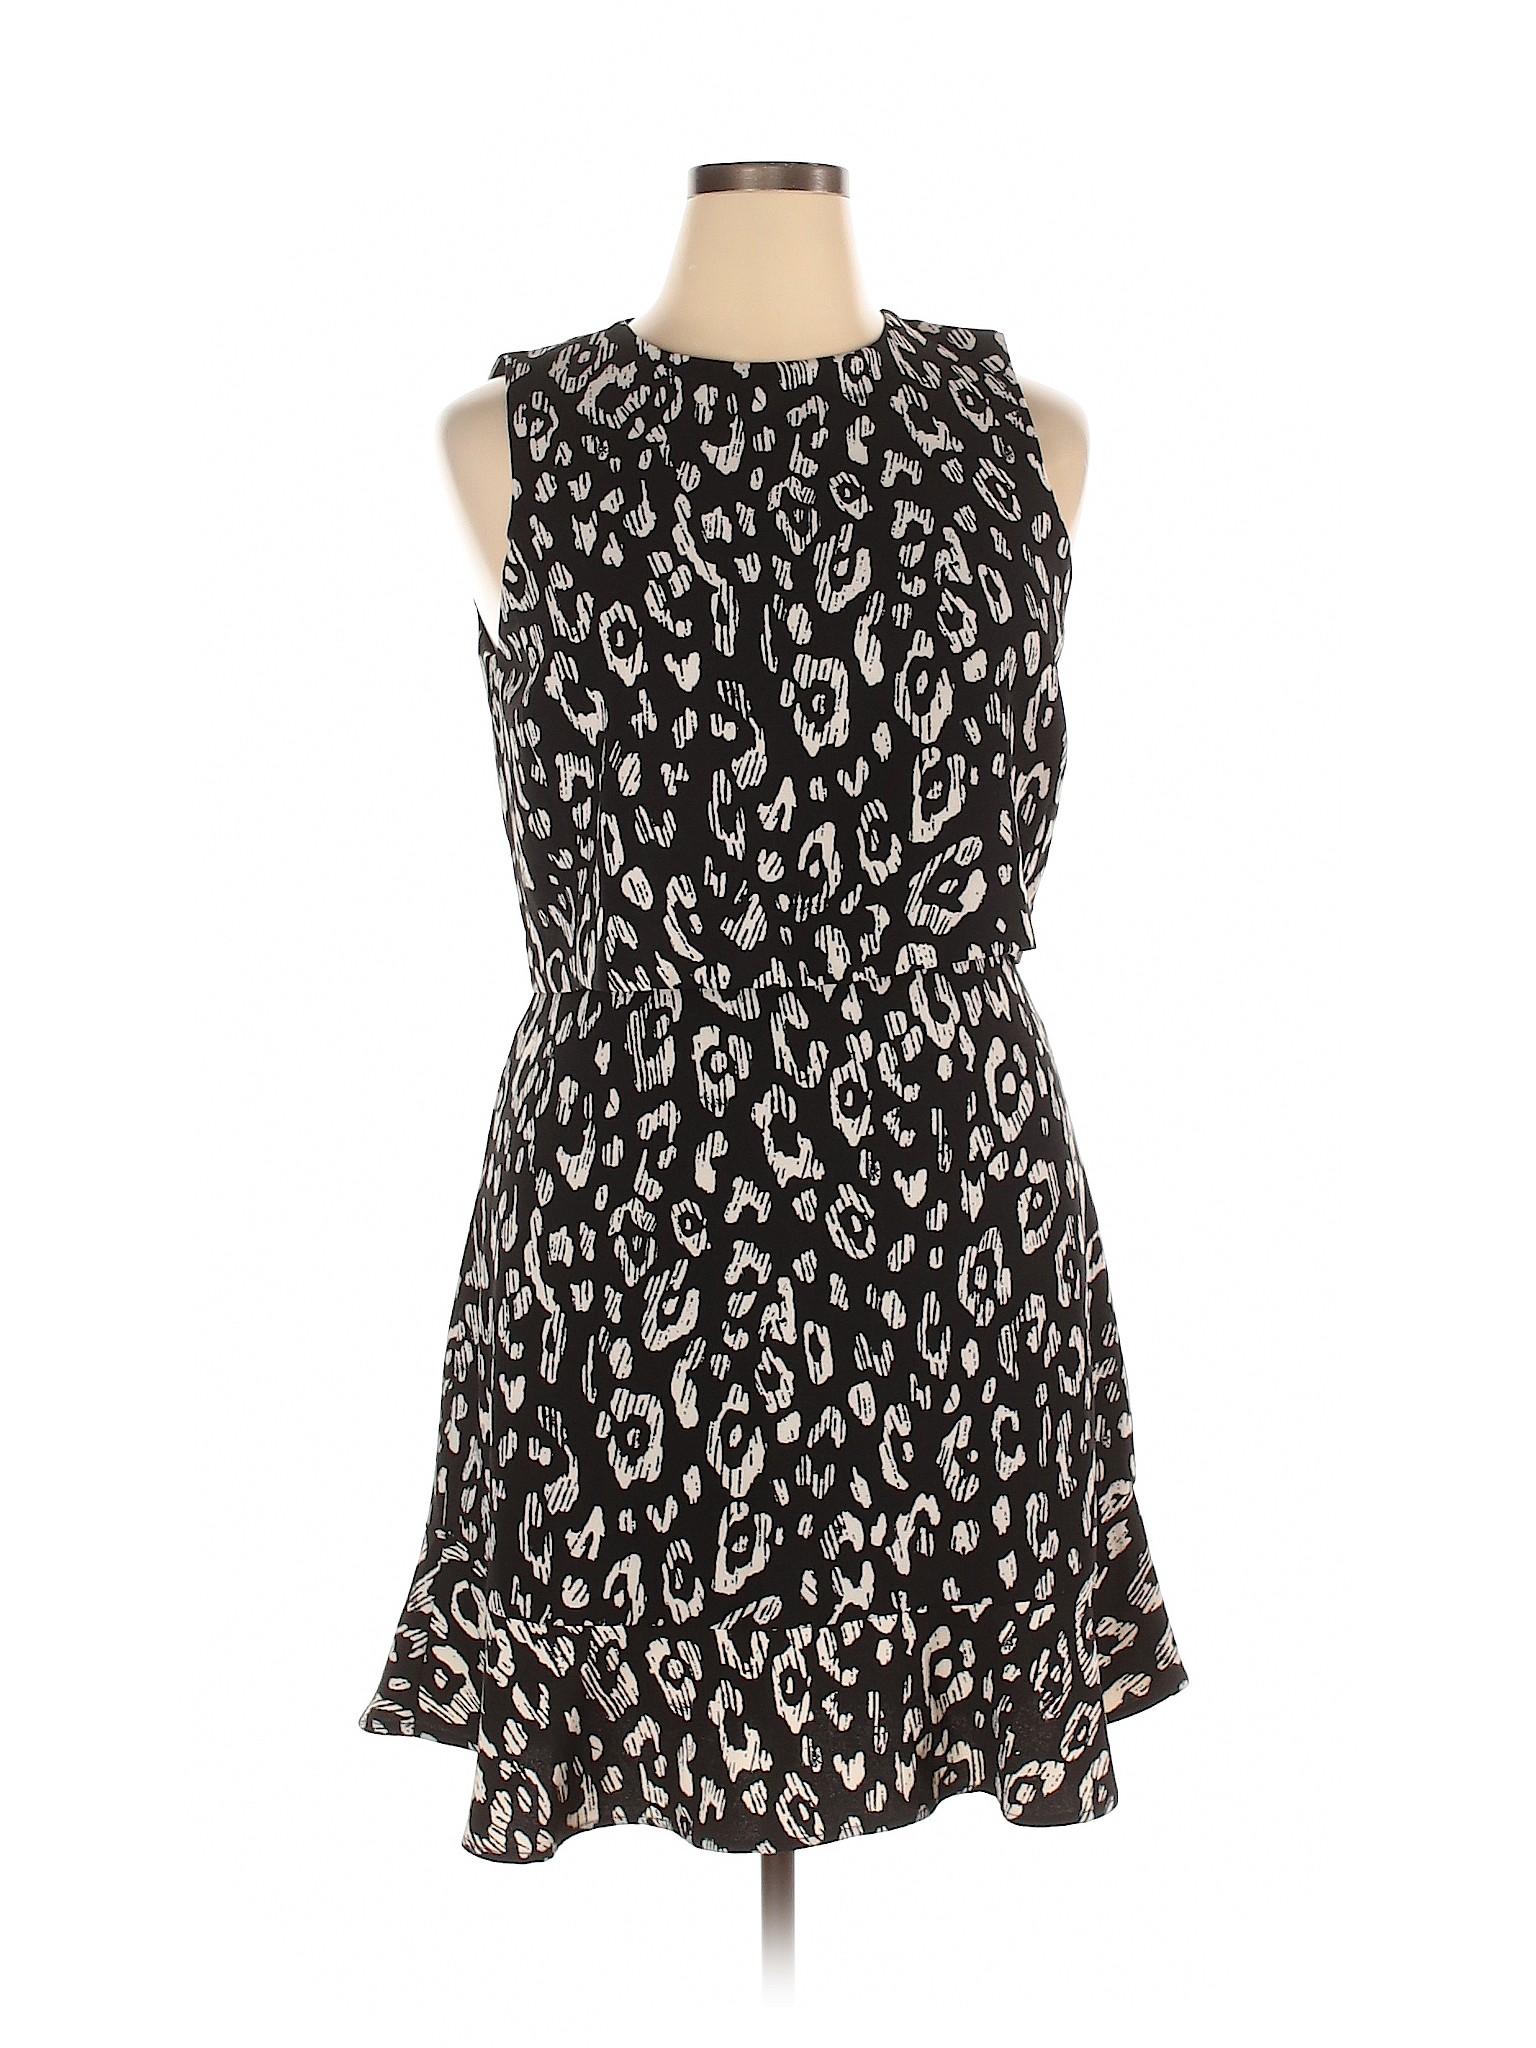 Banana Republic Factory Store Women Black Casual Dress 14 | eBay